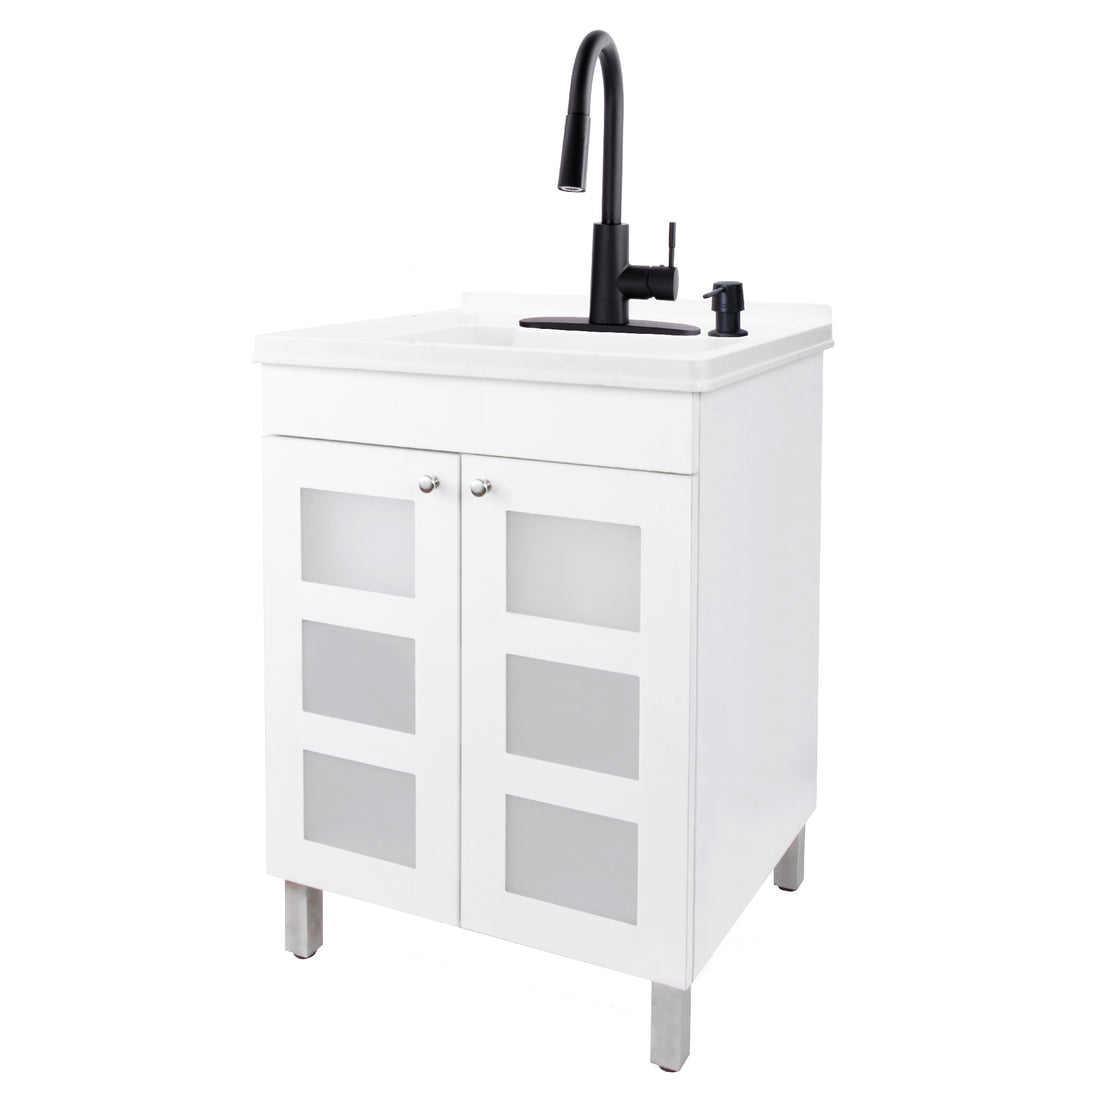 Tehila White Vanity Cabinet and White Utility Sink with Black Finish High-Arc Pull-Down Faucet - Utility sinks vanites Tehila